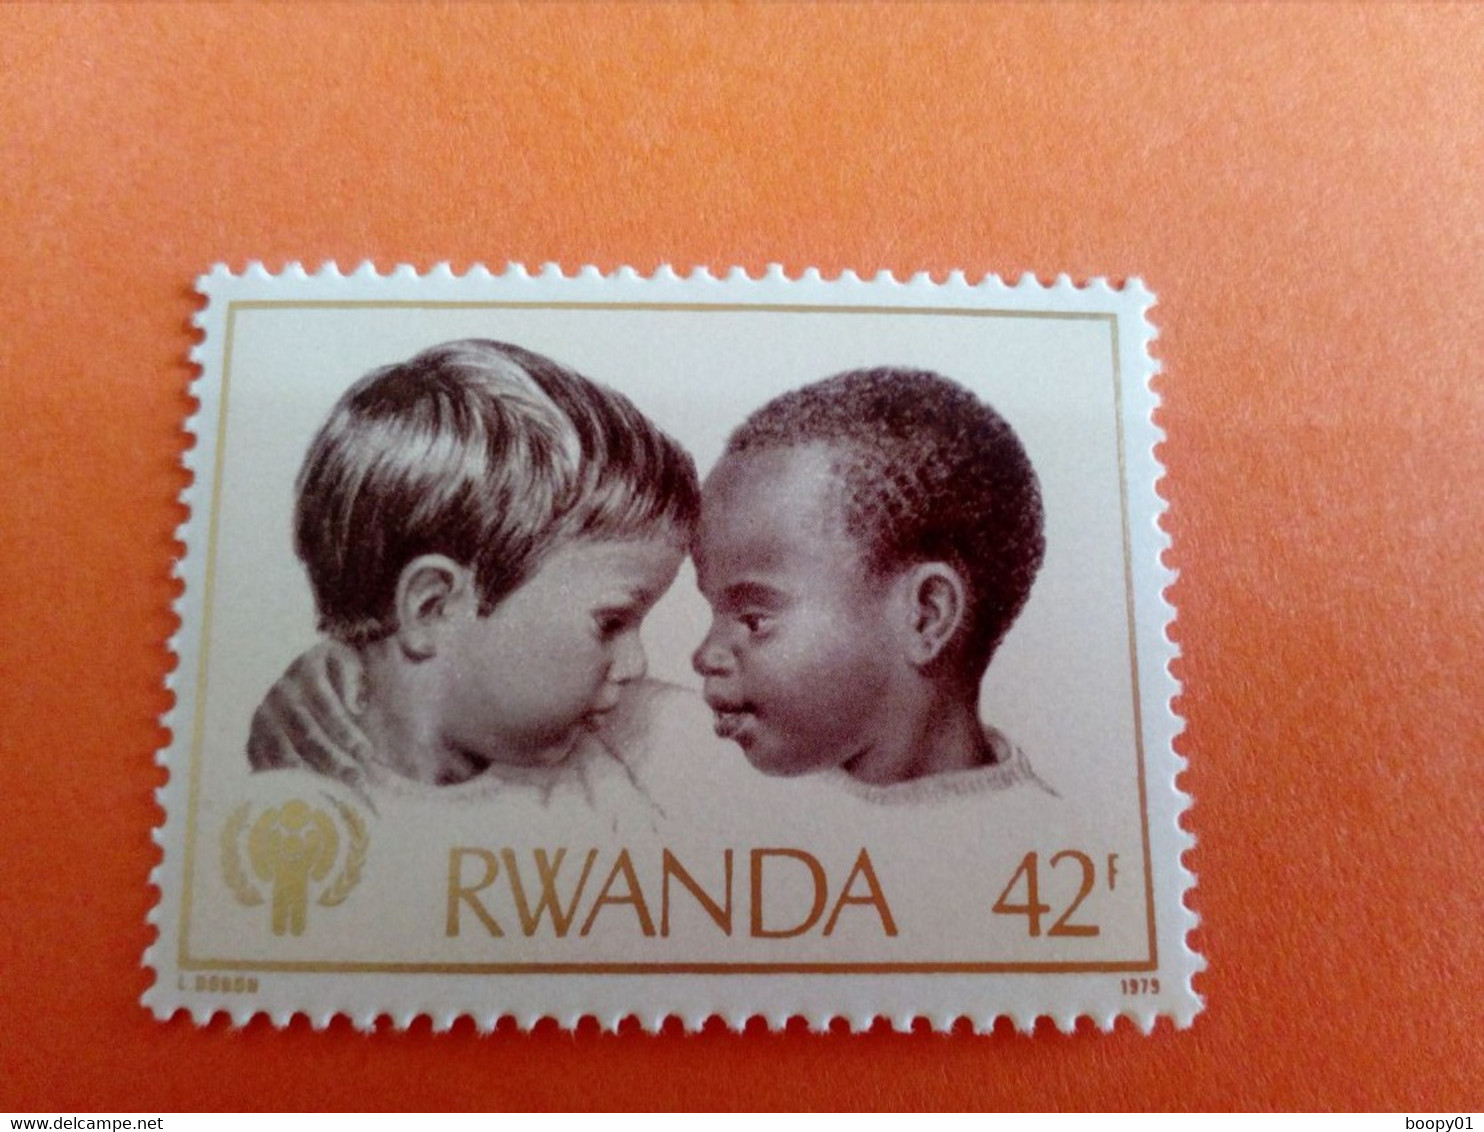 RWANDA - Rwandan Republic - Timbre 1975 : Ethnie - Peuple Du Rwanda Représenté Par 2 Enfants - Neufs